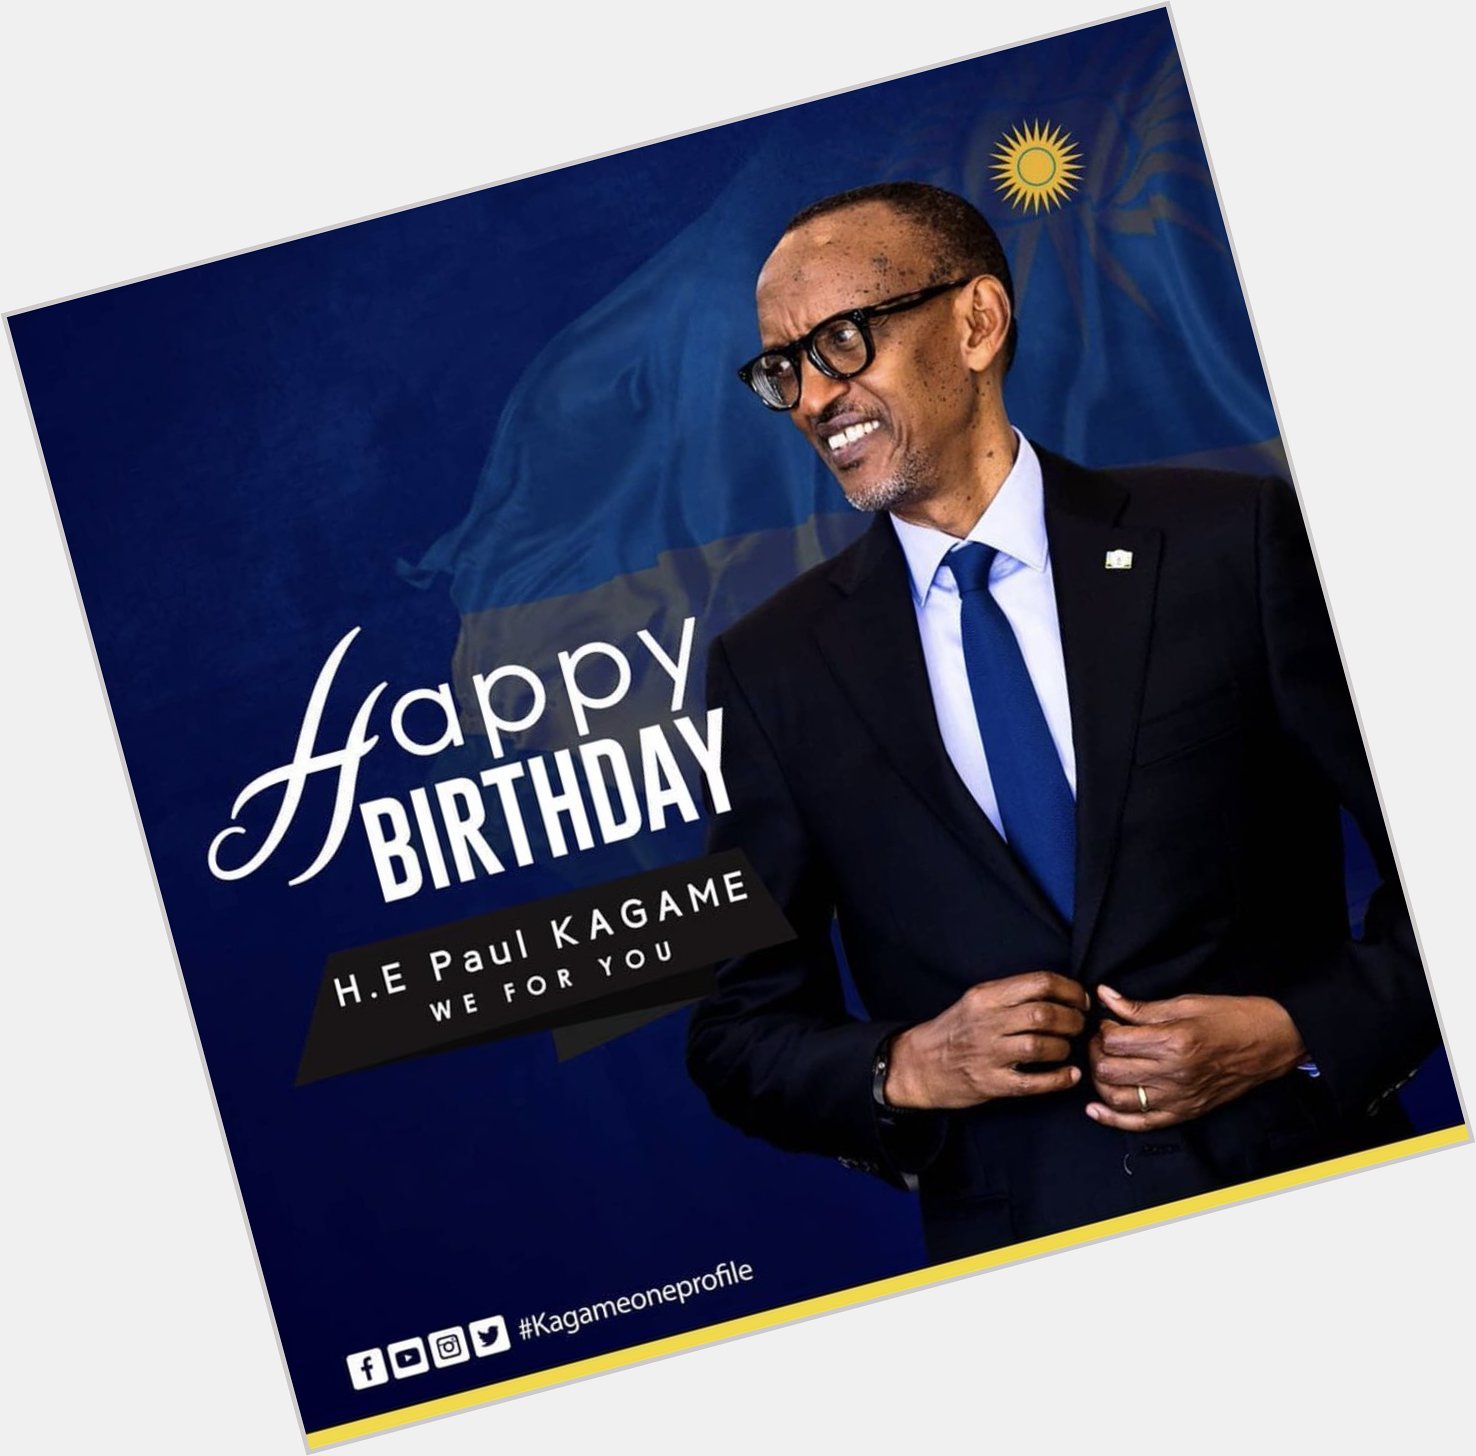 Happy birthday President Paul Kagame!  